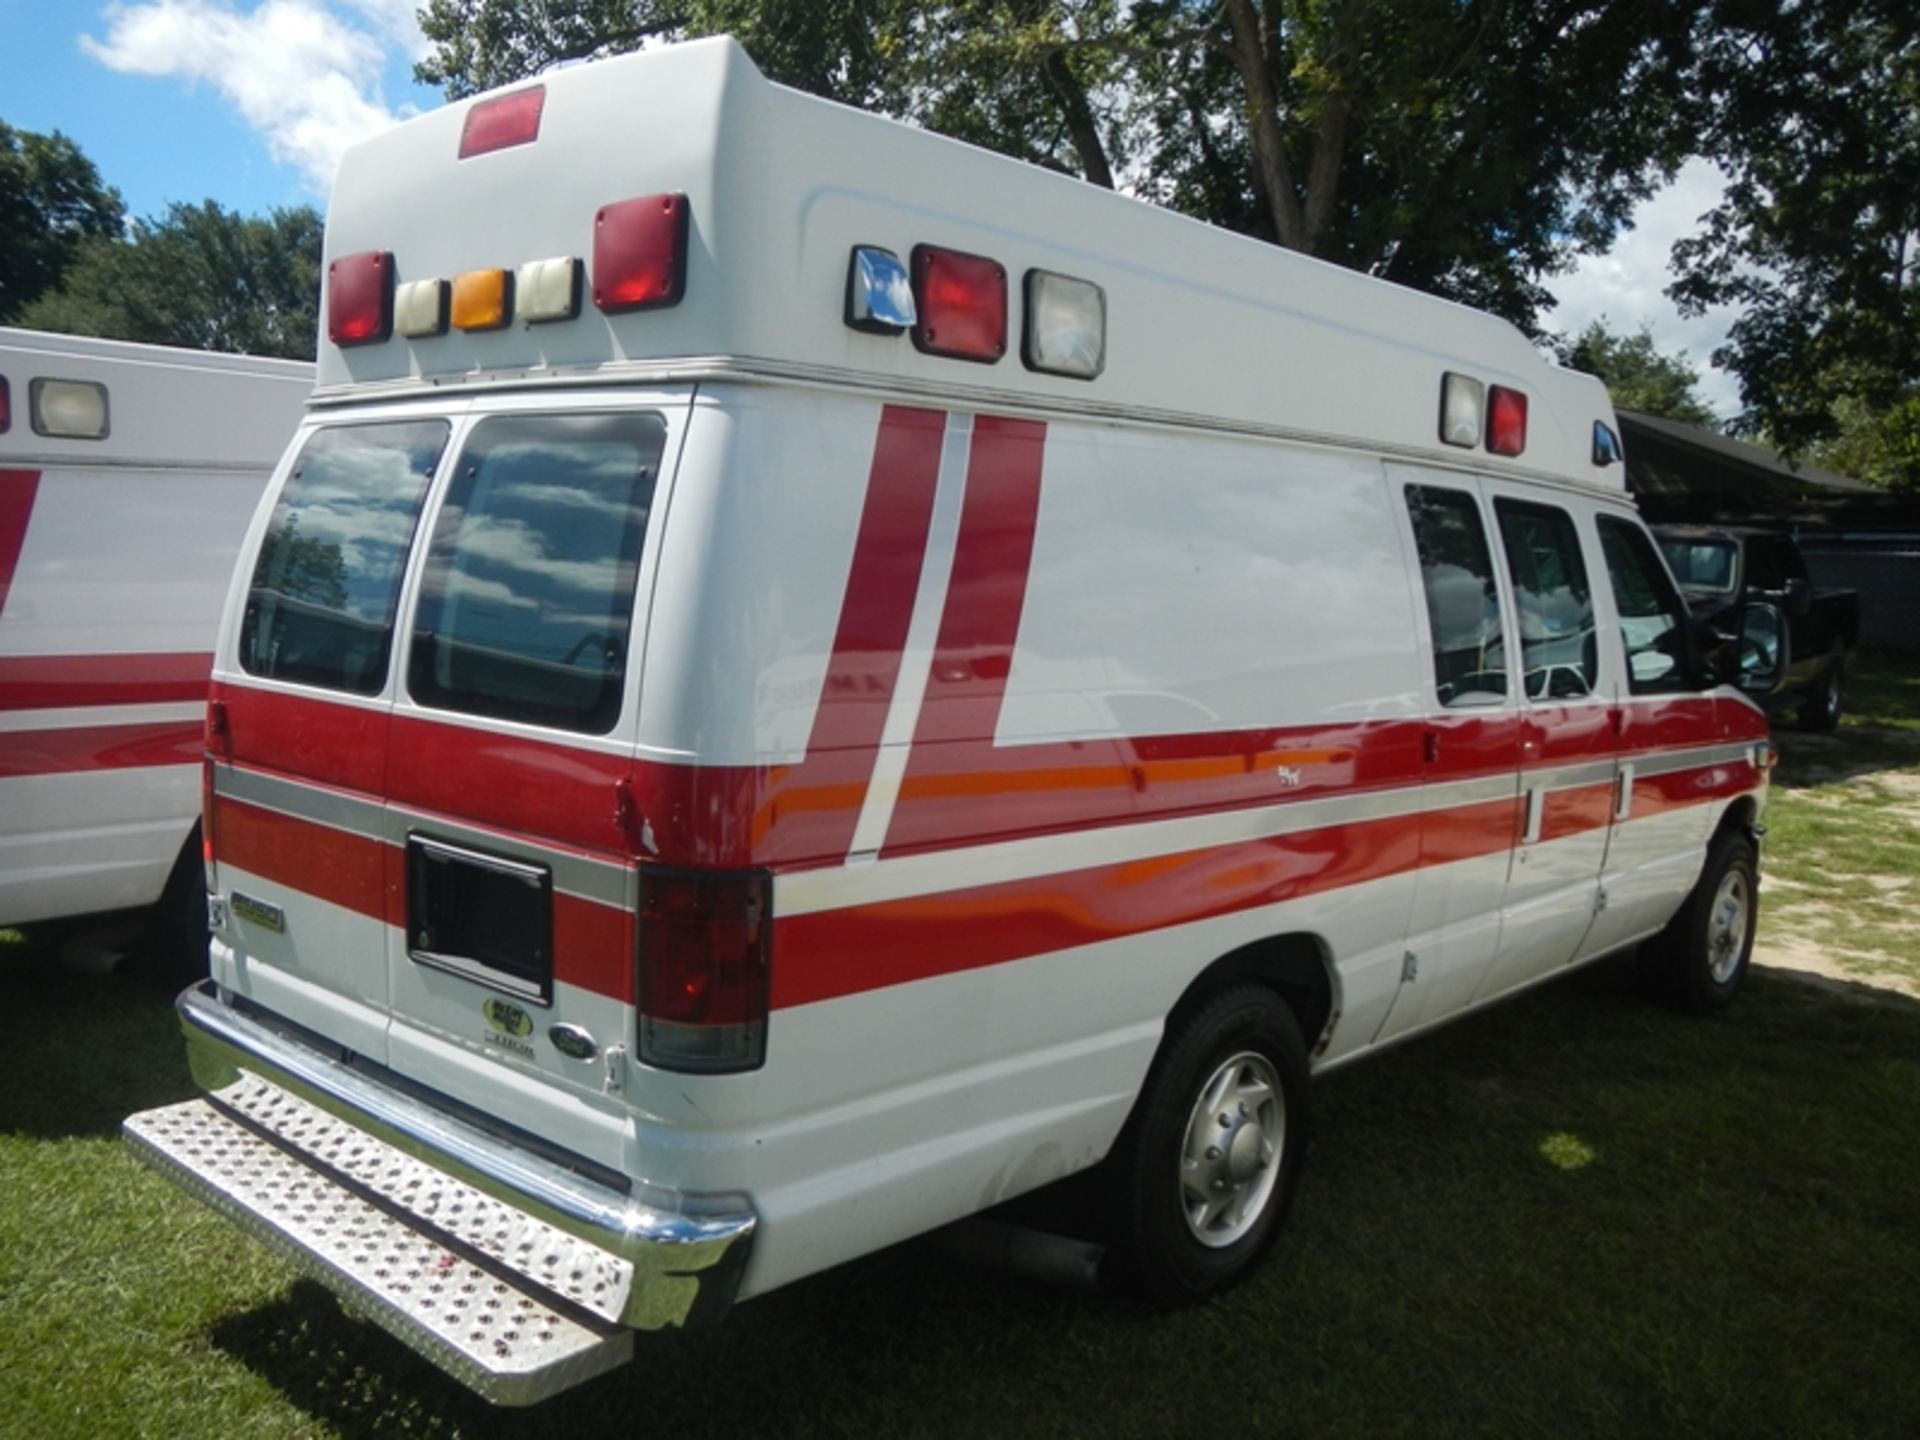 2010 FORD E-350 Super Duty Type II Ambulance, dsl 248,059 miles - VIN: 1FDSS3EP8ADA23977 - Image 3 of 6